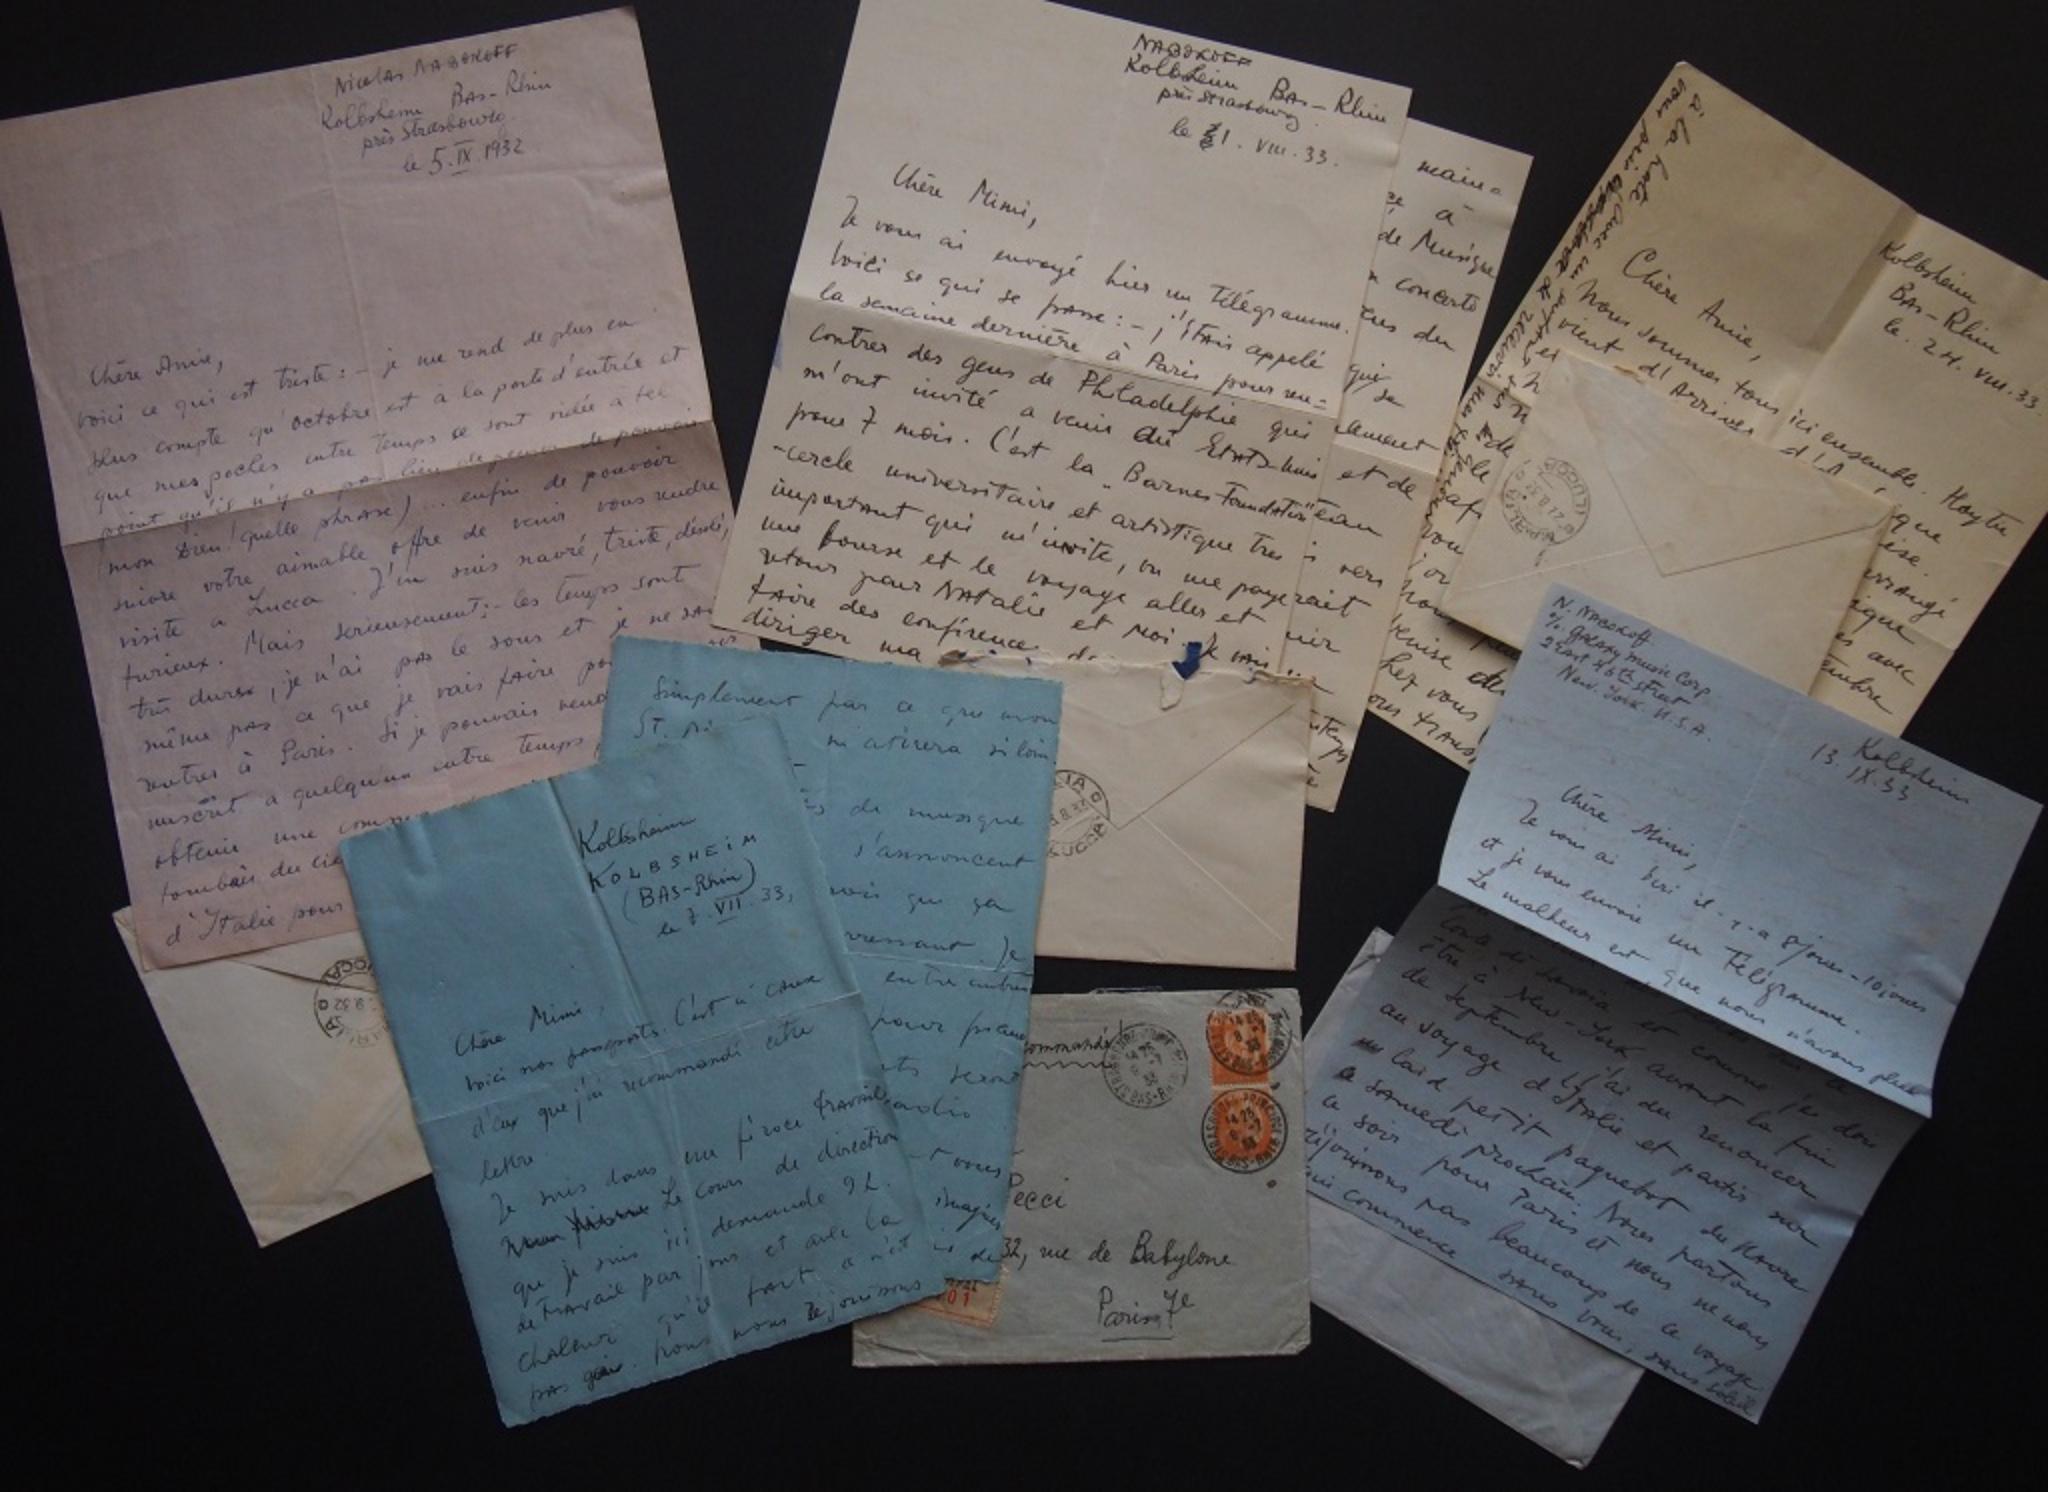 Cinq lettres autographes signées par Nicolas Nabokov - 1932/1933